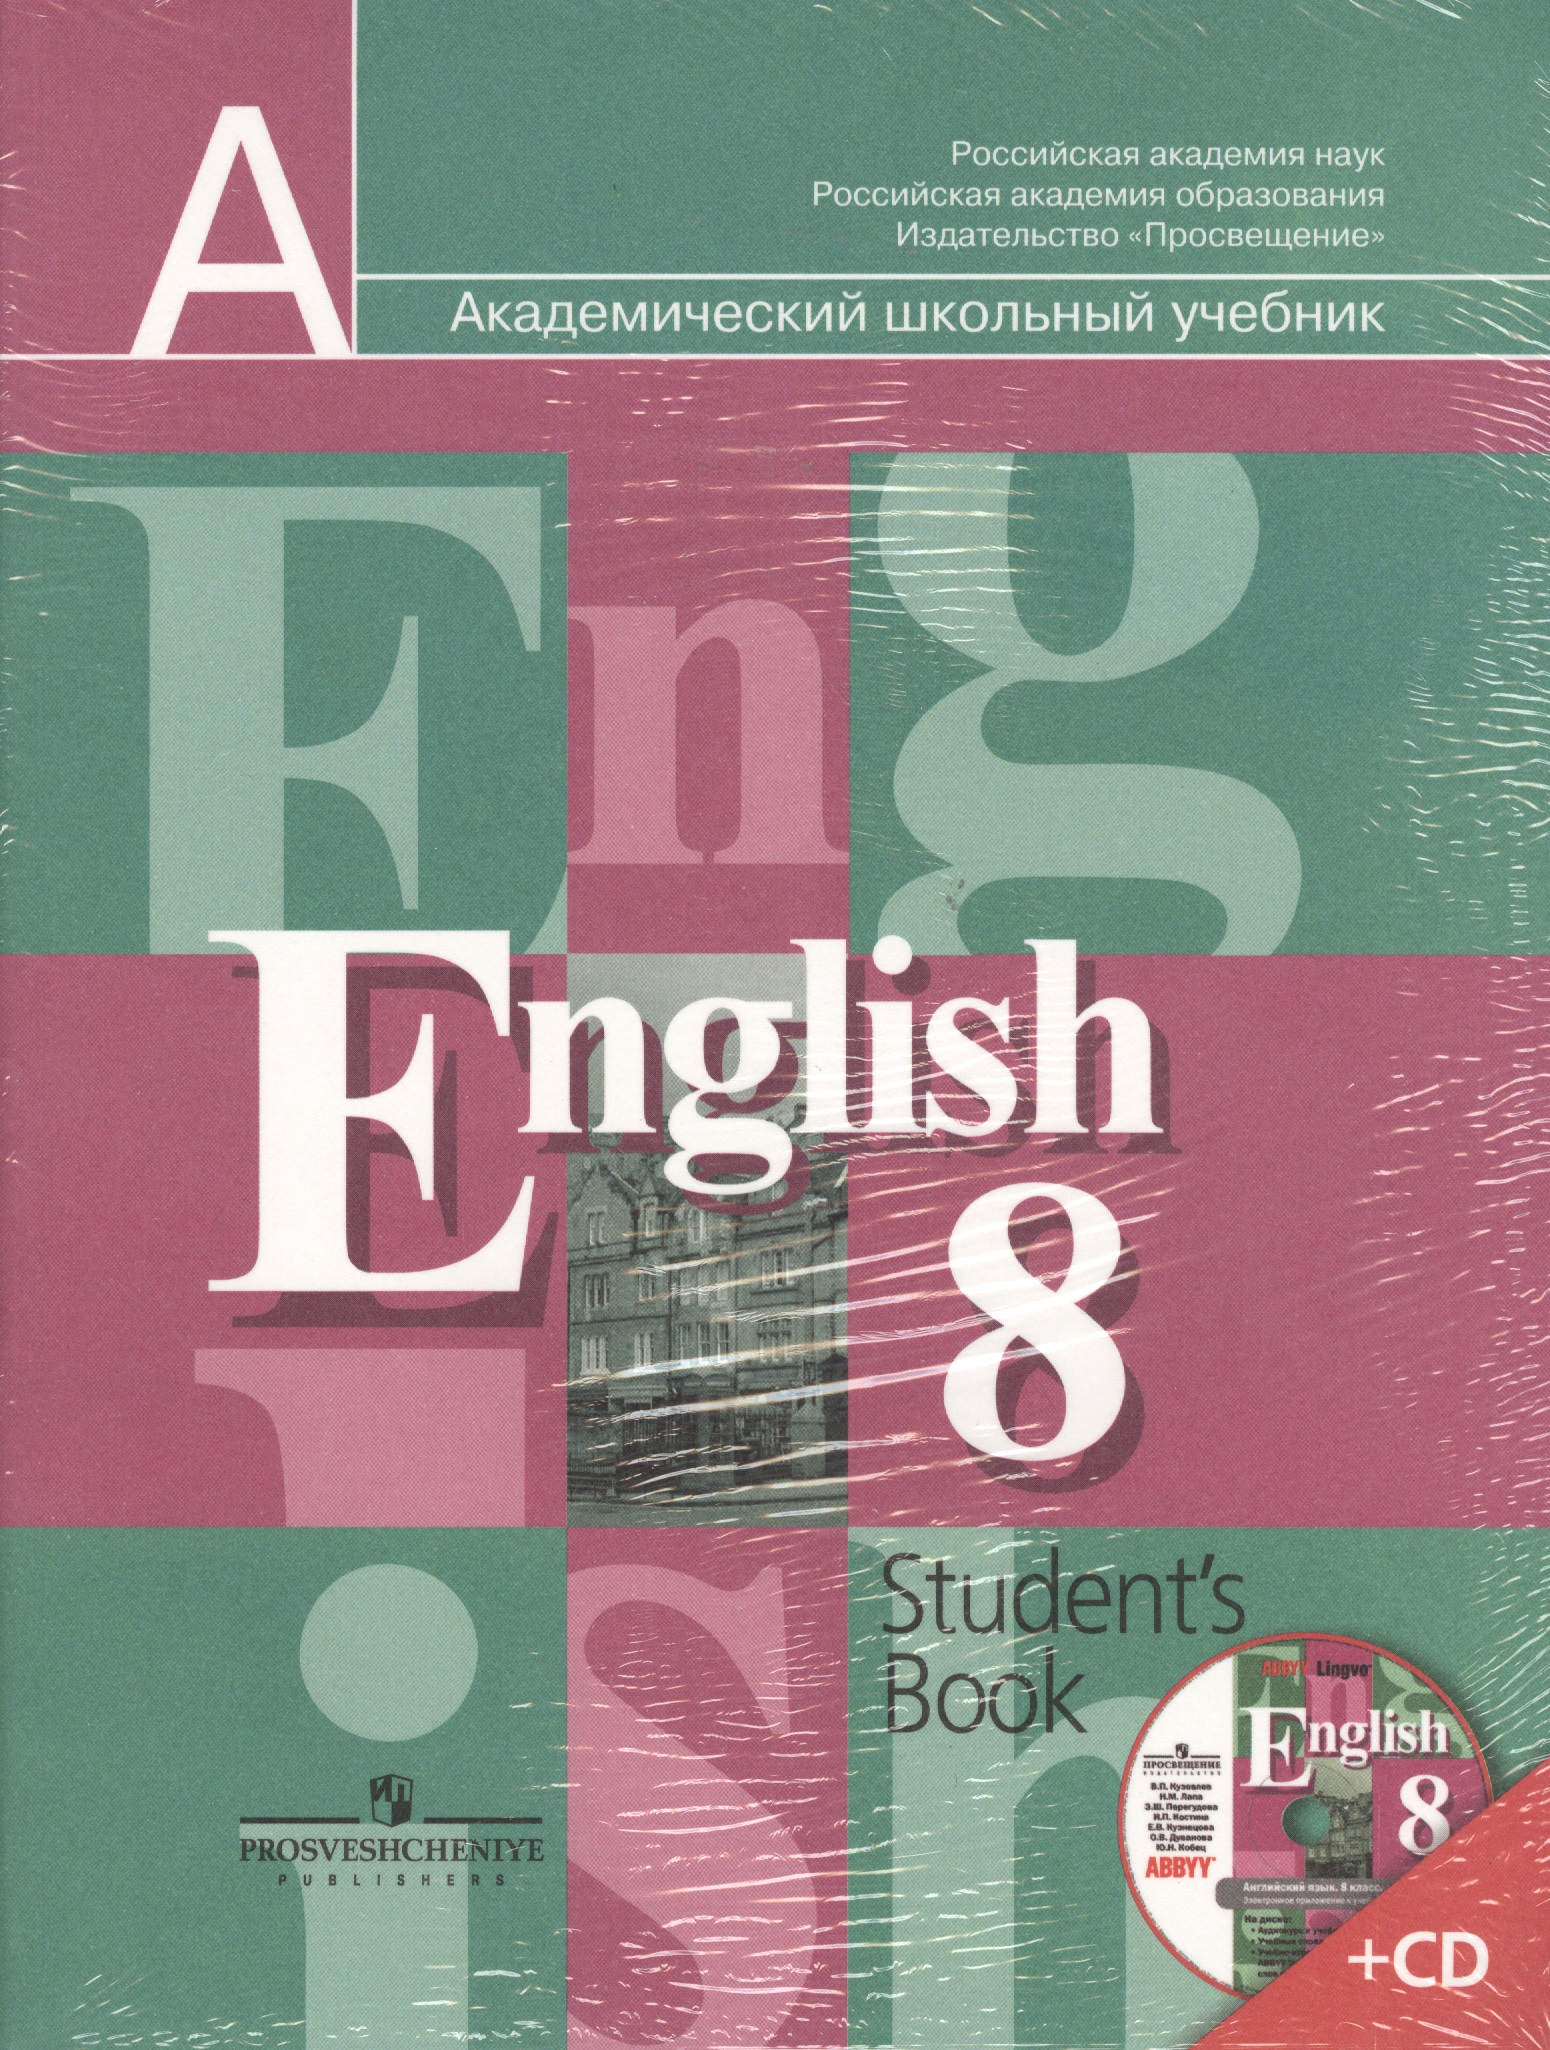 Кузовлев 8 класс аудио. Английский язык. Учебник. Учебник англисгогоязыка. Валлийский язык учебник. Ученик англйского языка.